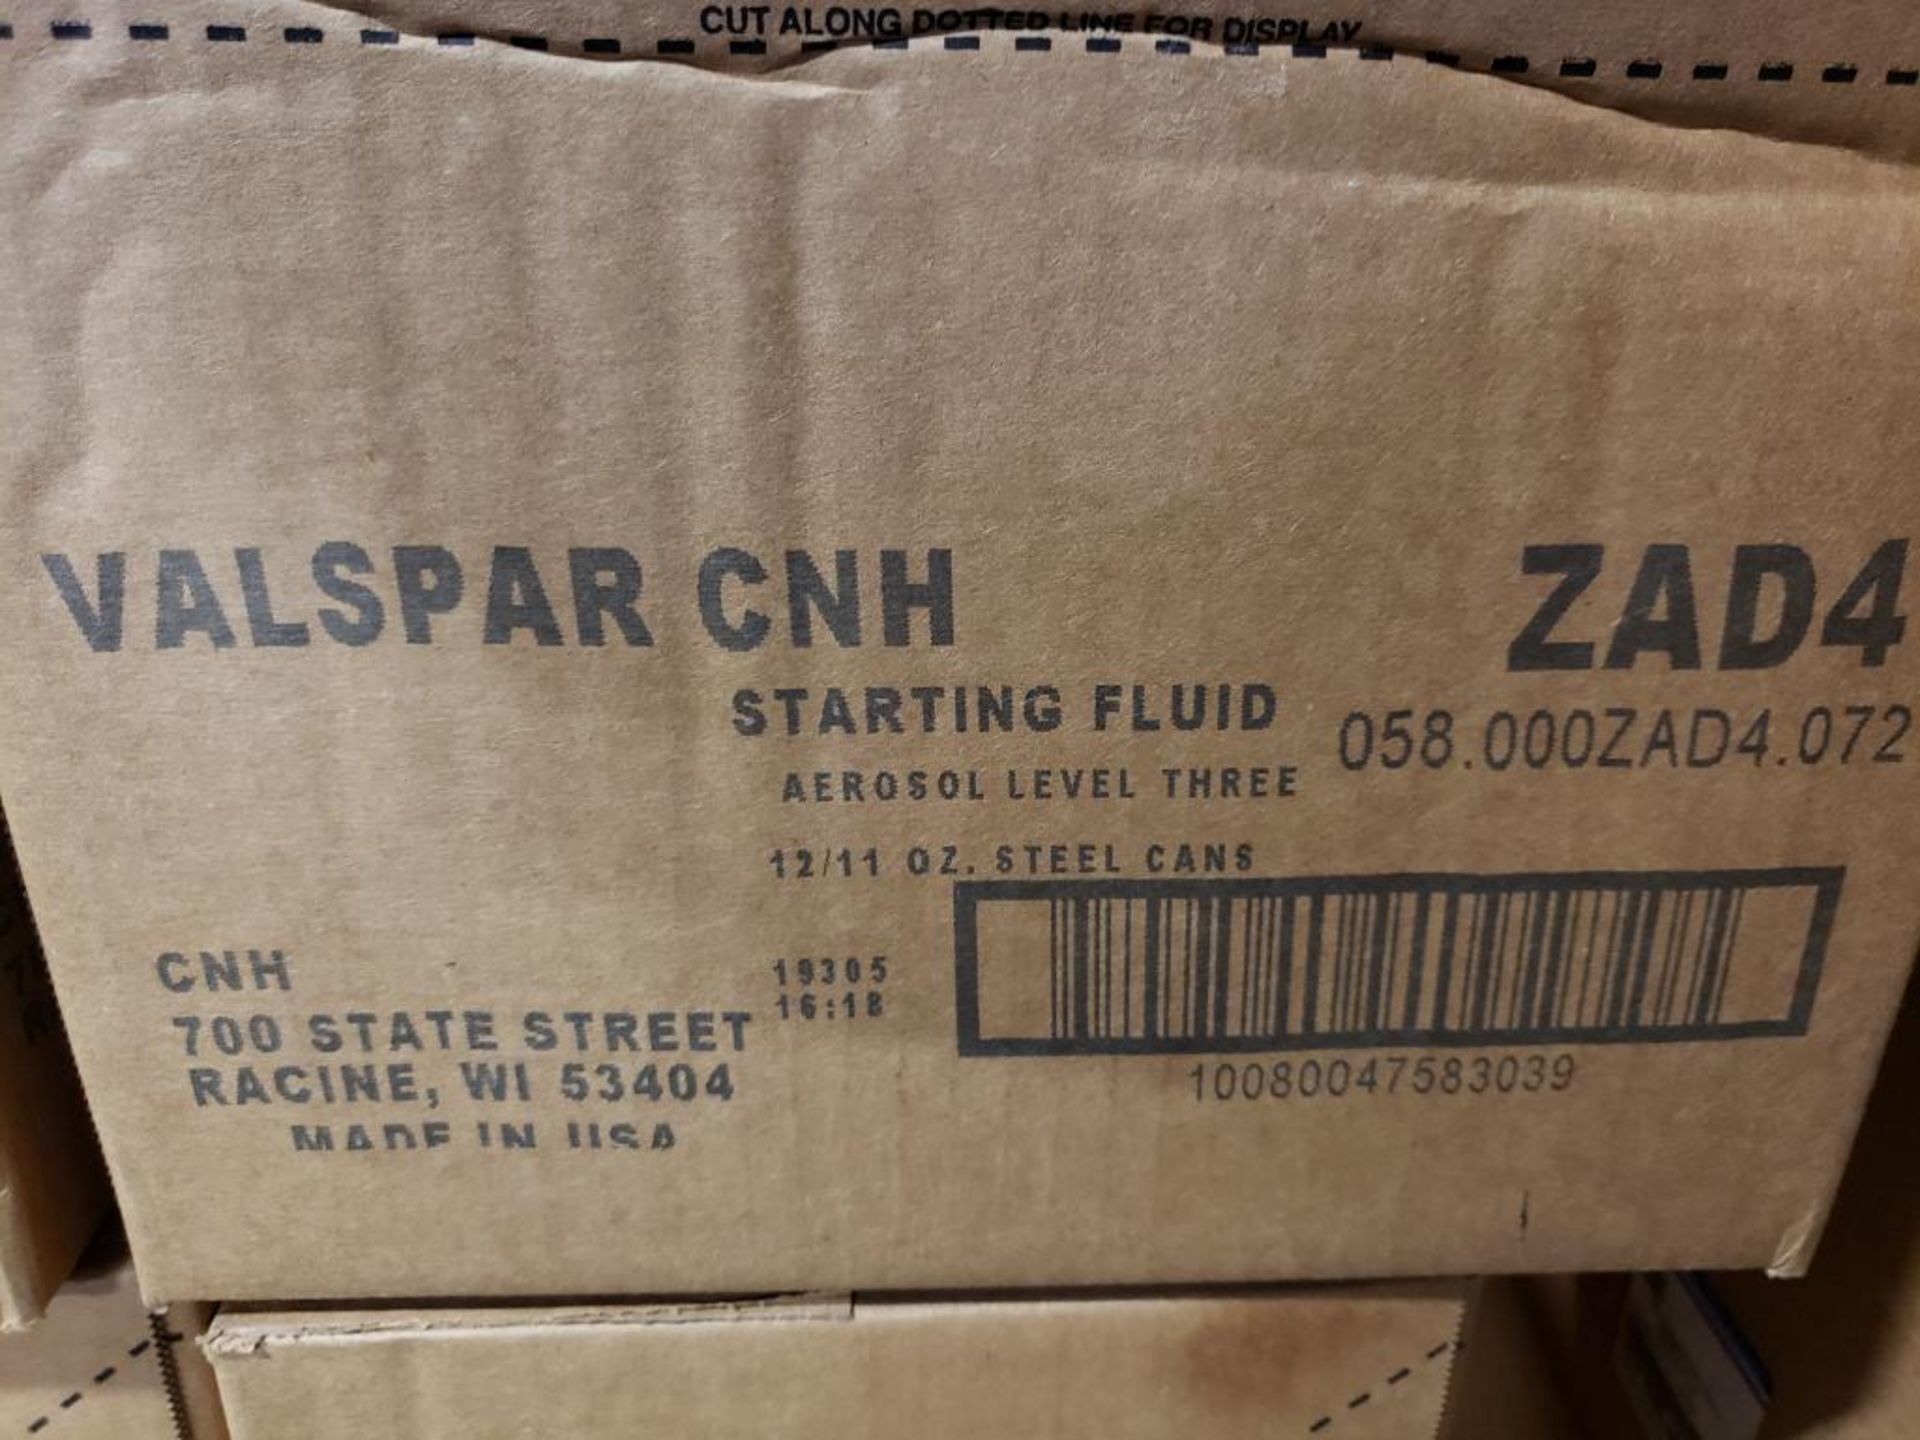 Qty 48 - Valspar CNH Starter fluid. ZAD4. (4 Boxes of 12 Cans each) - Image 2 of 4